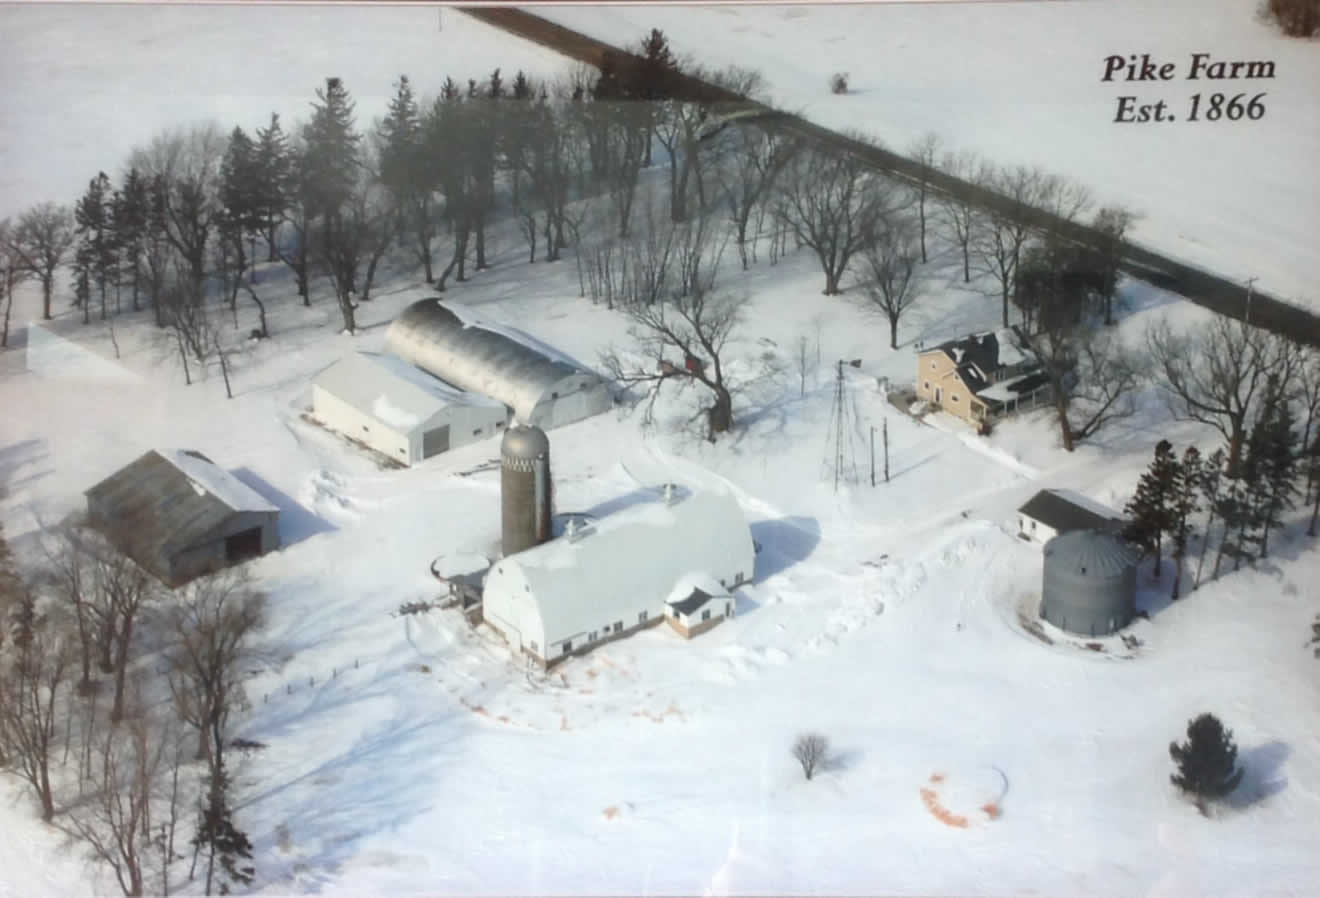 Pike Farm aerial shot, February 2014